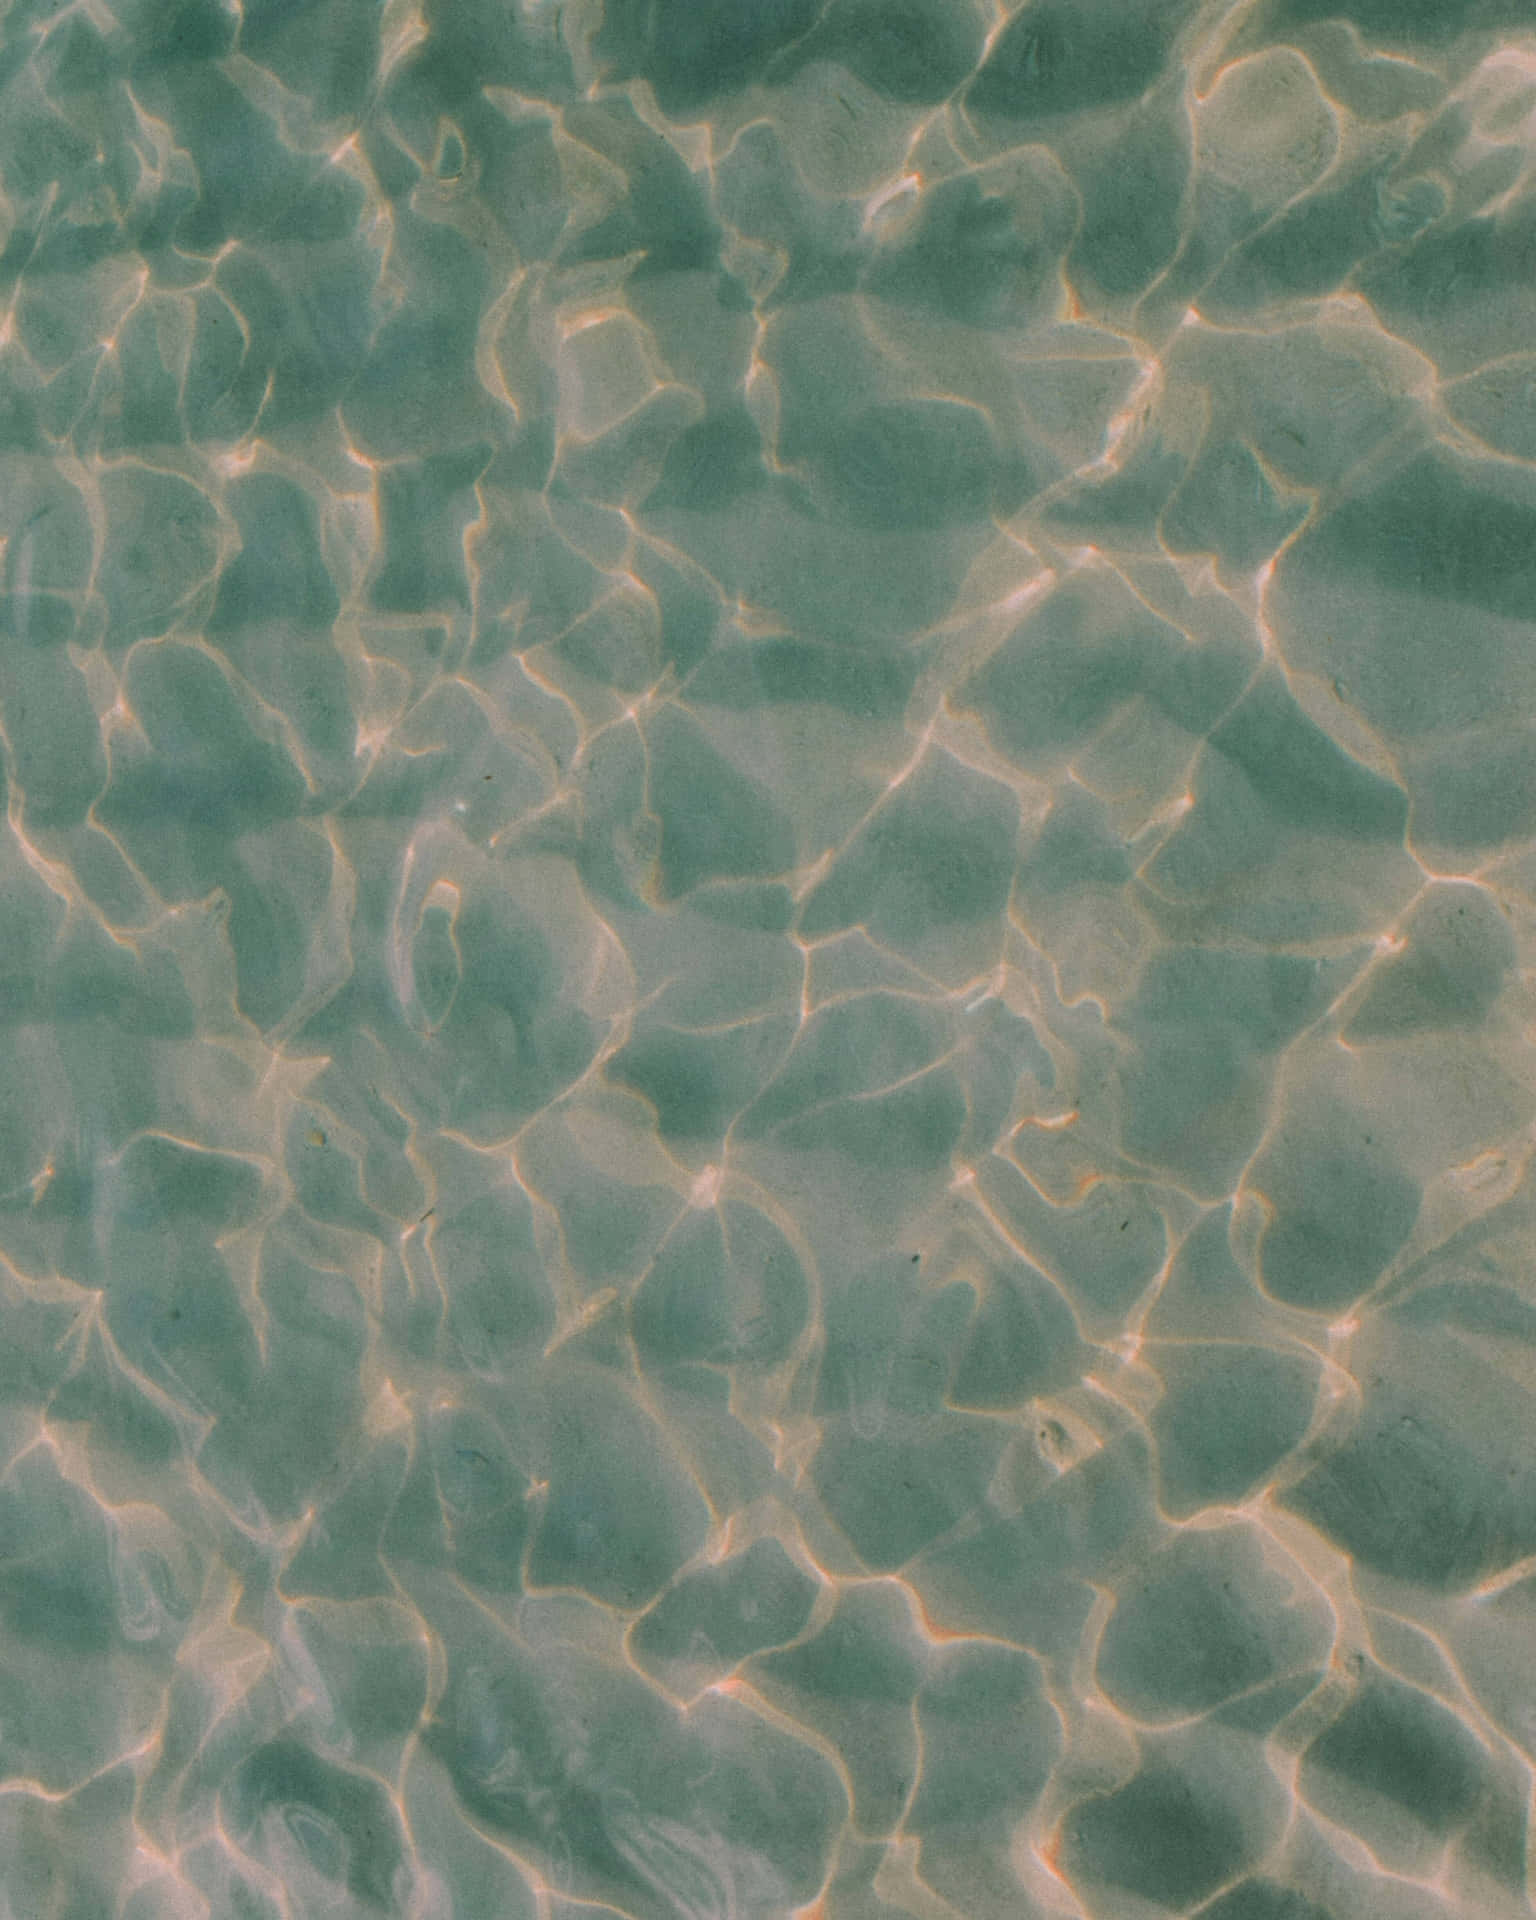 Pastel Summer Aesthetic_ Sunlit Water Texture.jpg Wallpaper